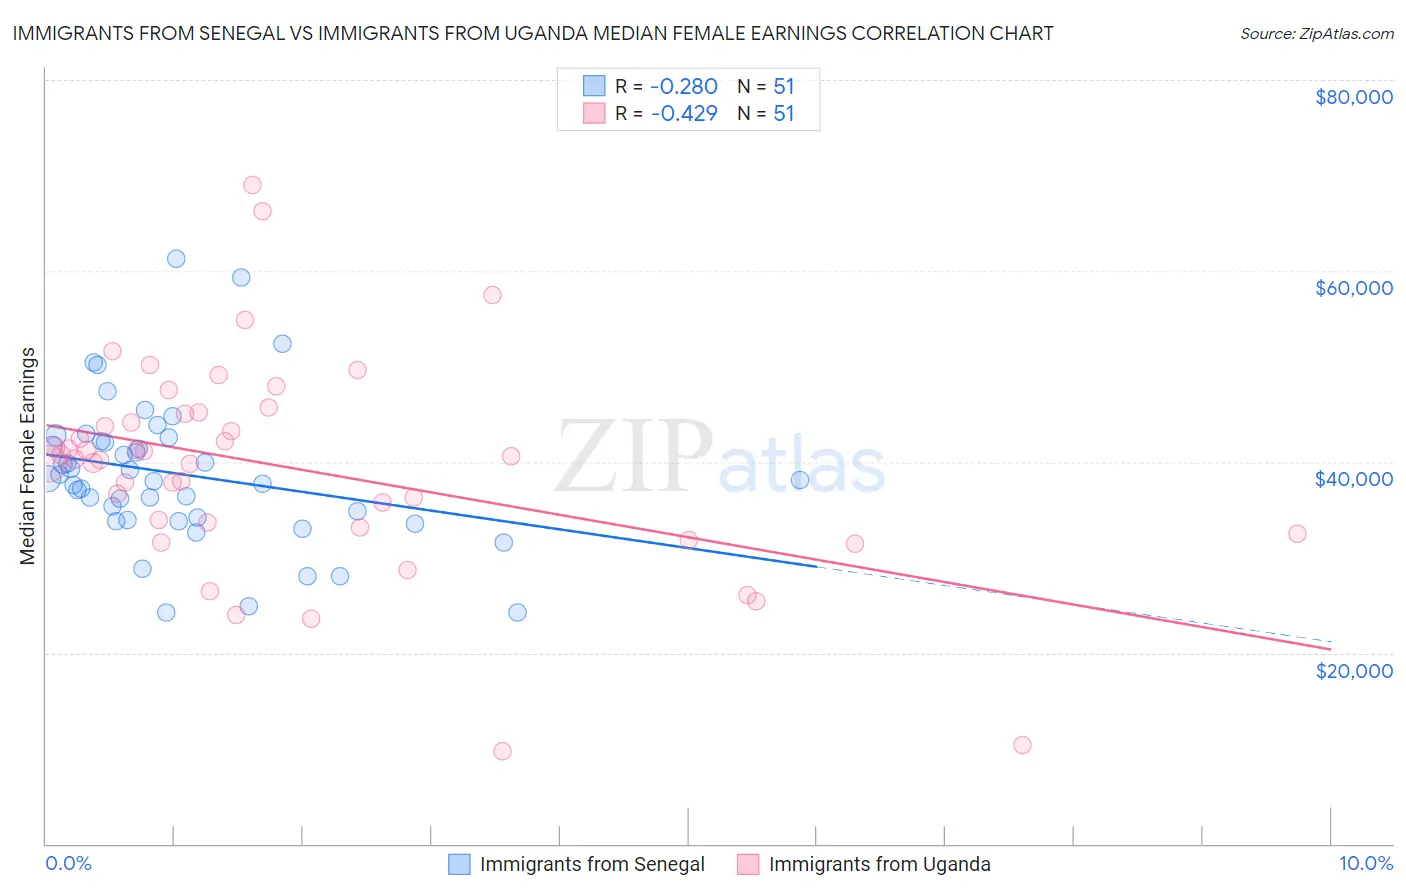 Immigrants from Senegal vs Immigrants from Uganda Median Female Earnings